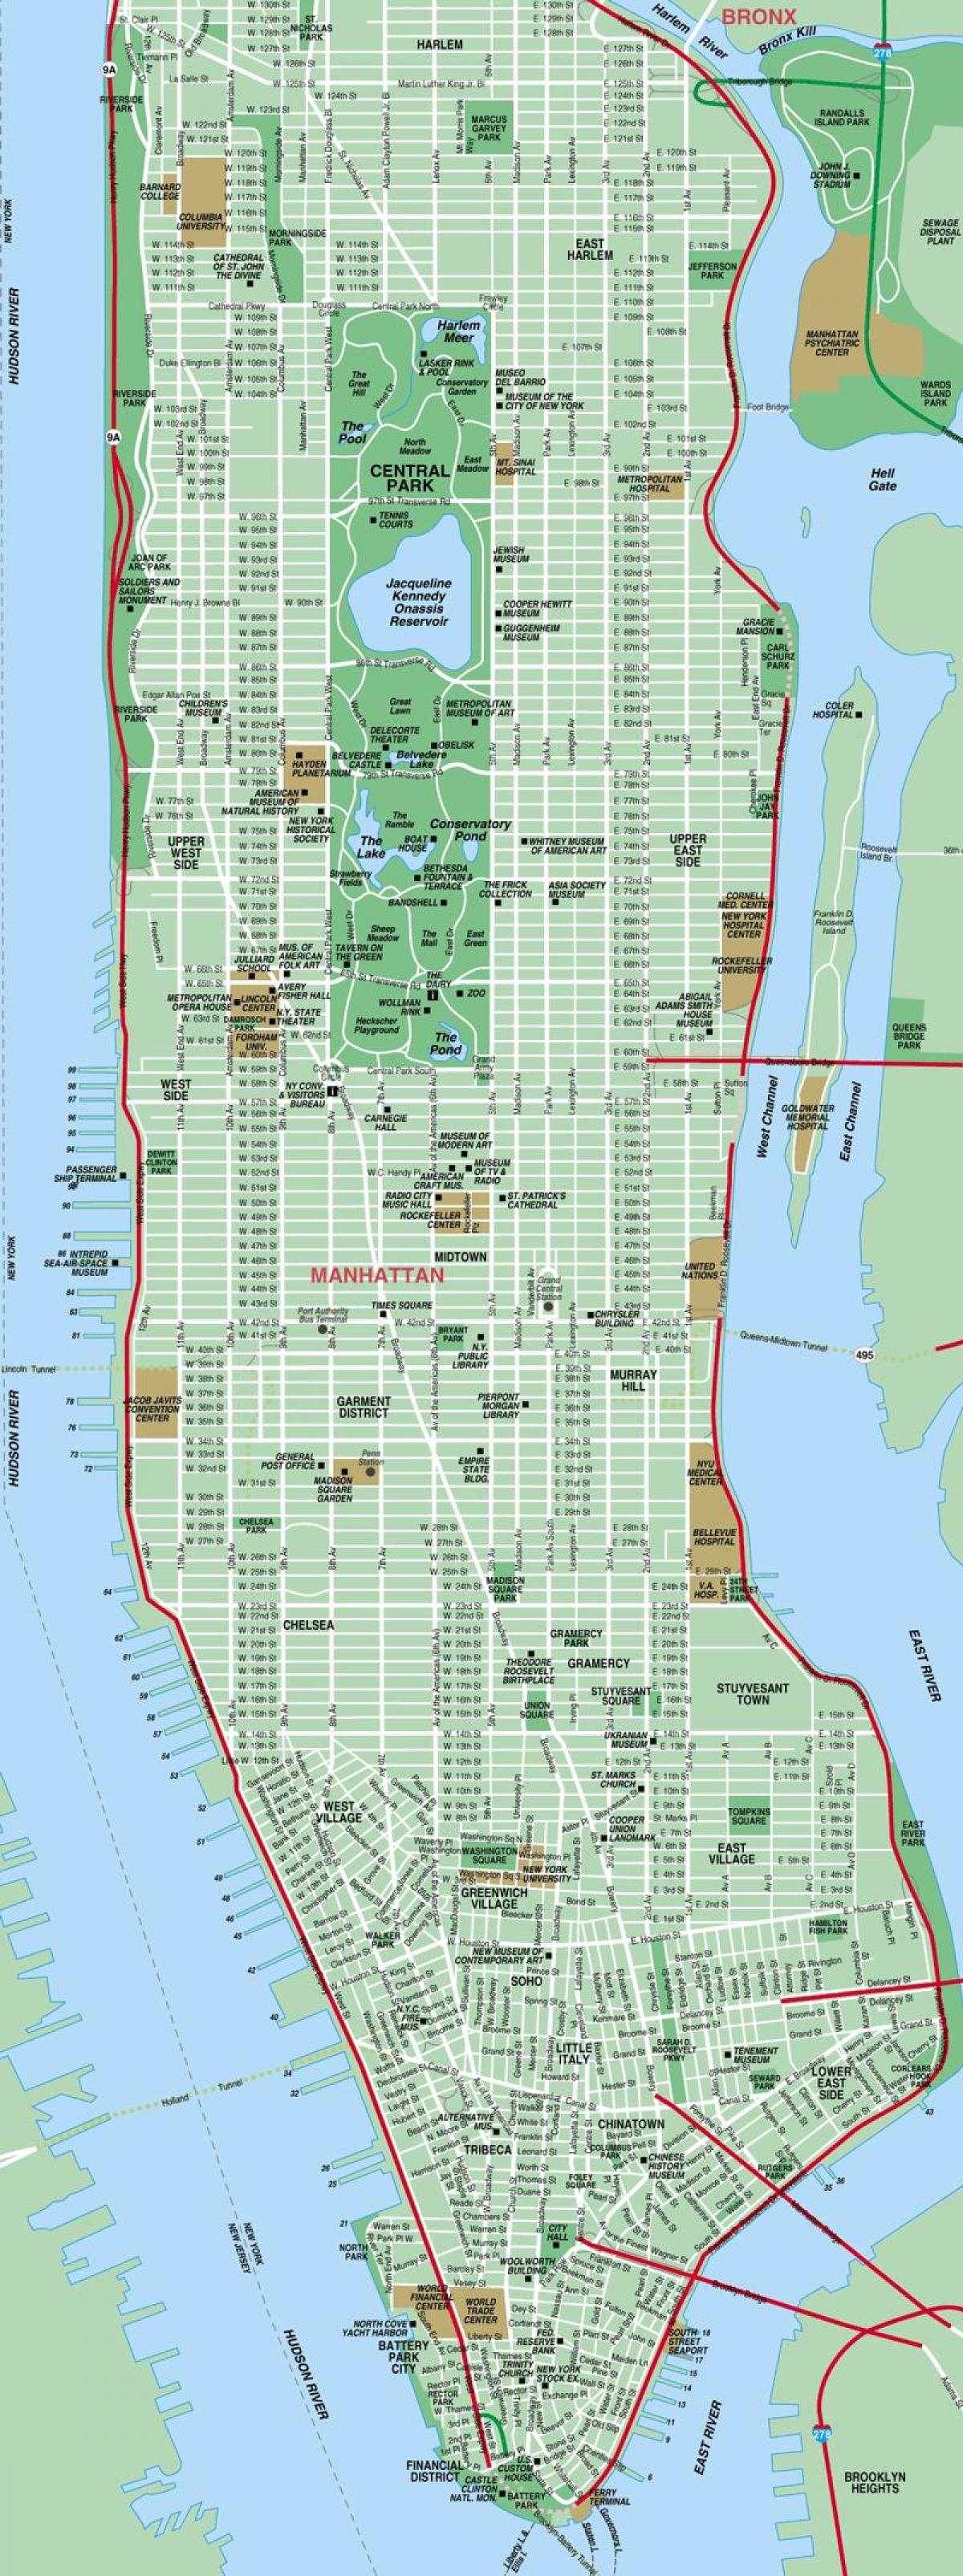 detaljert kart over Manhattan